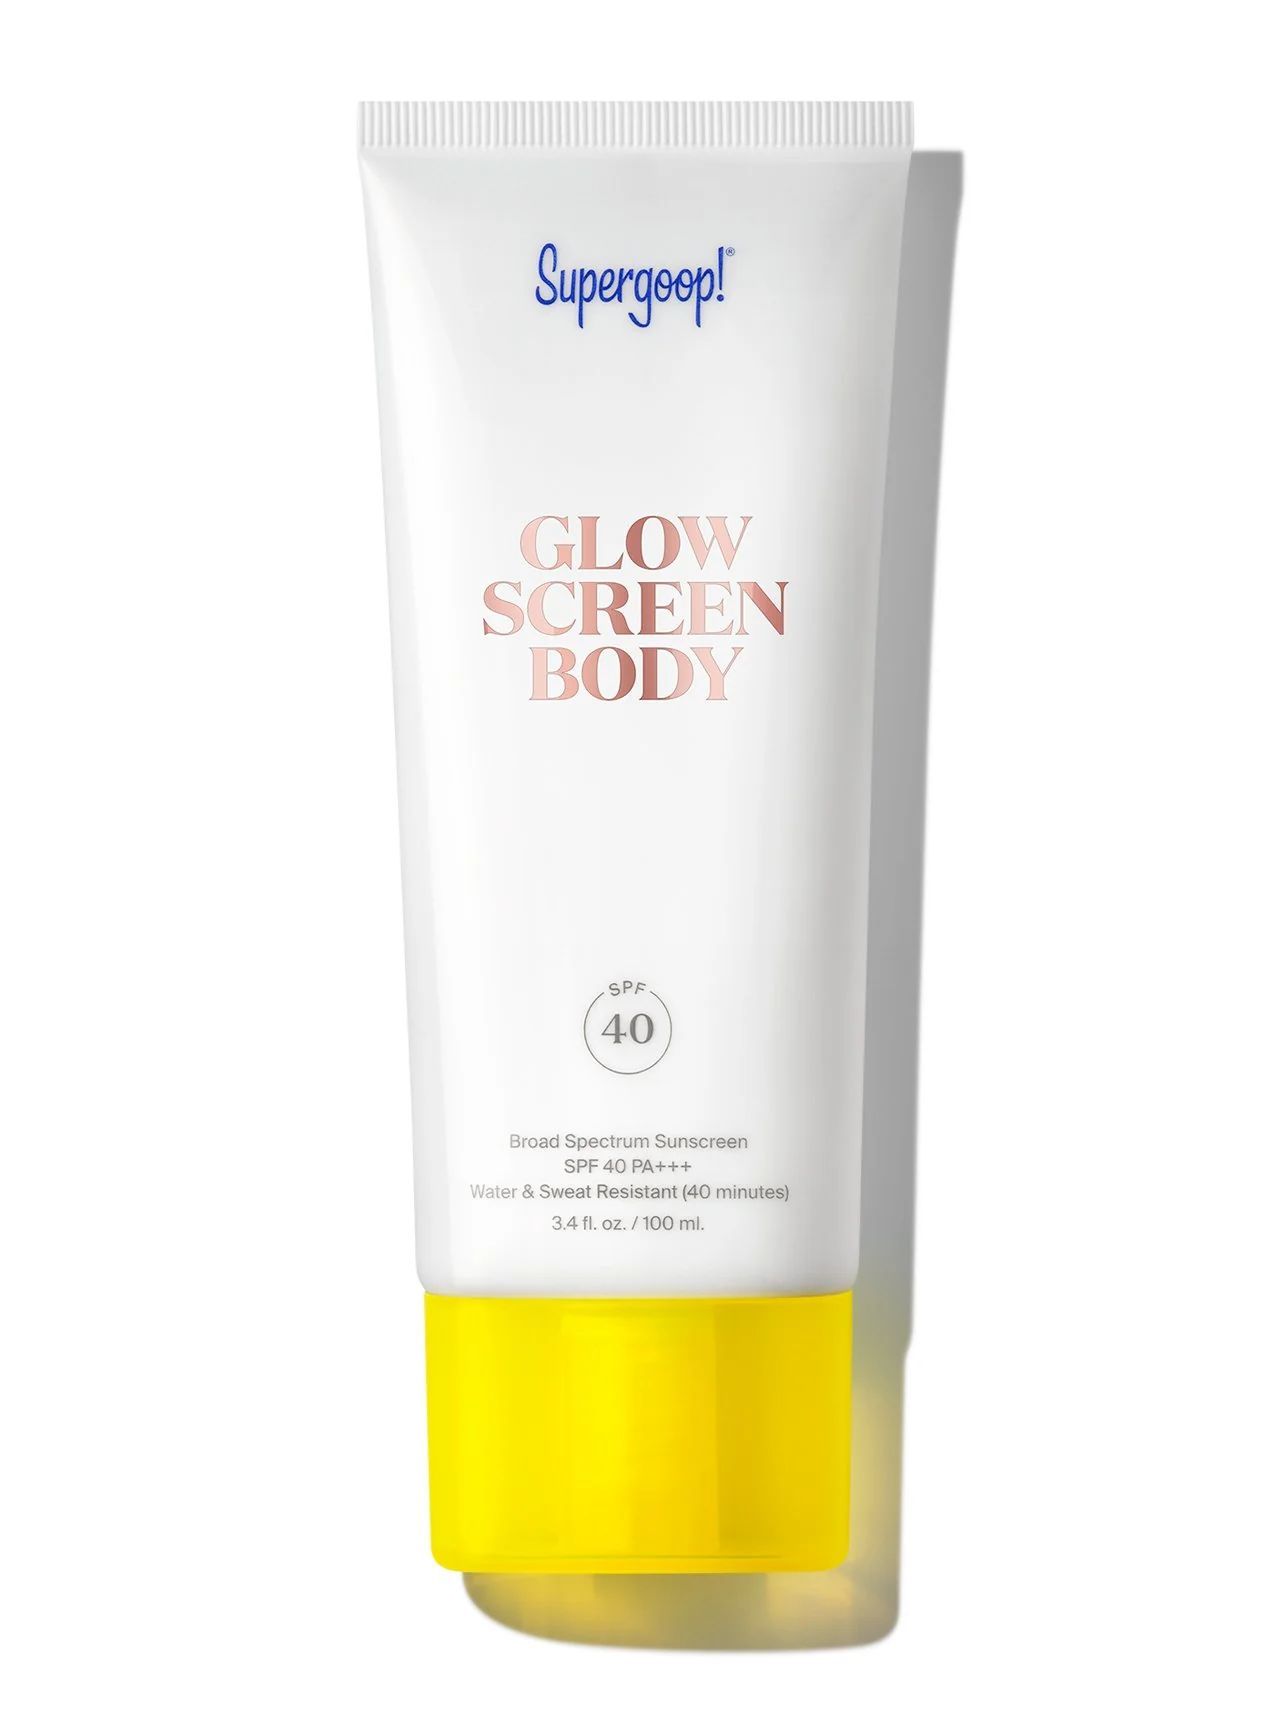 Glowscreen Body SPF 40 | Supergoop